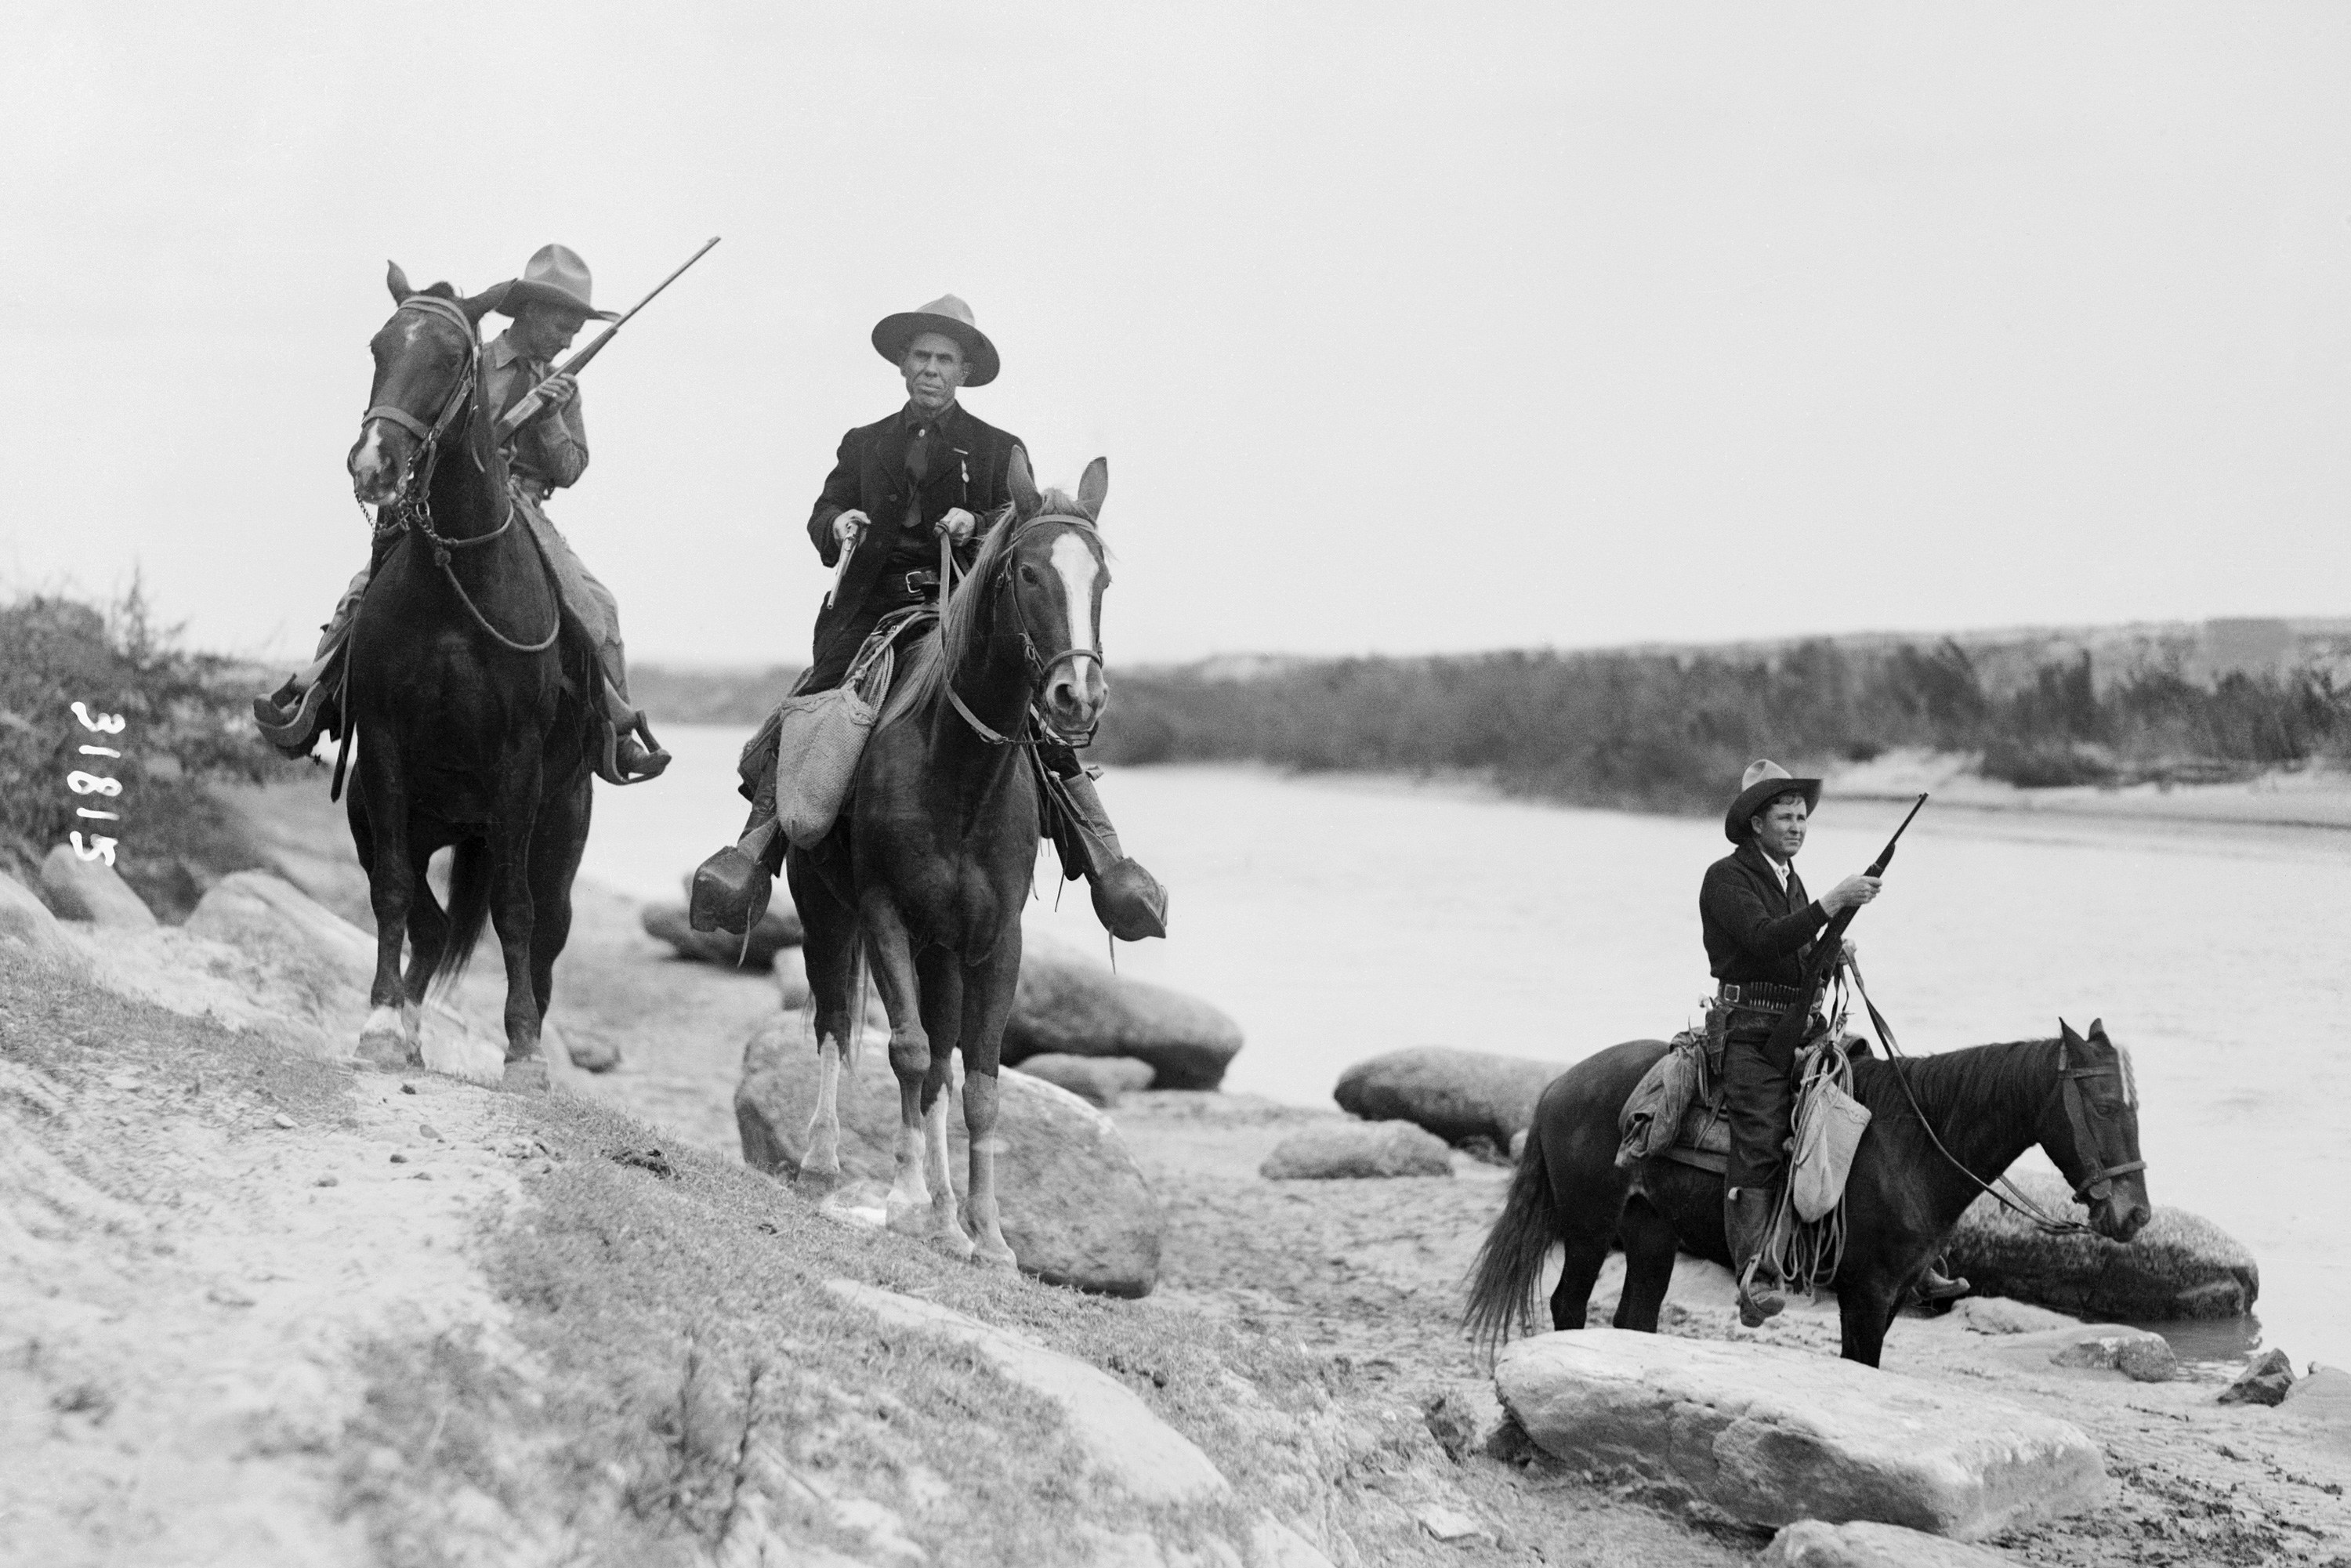 (Original Caption) Texas Rangers patrolling the border.